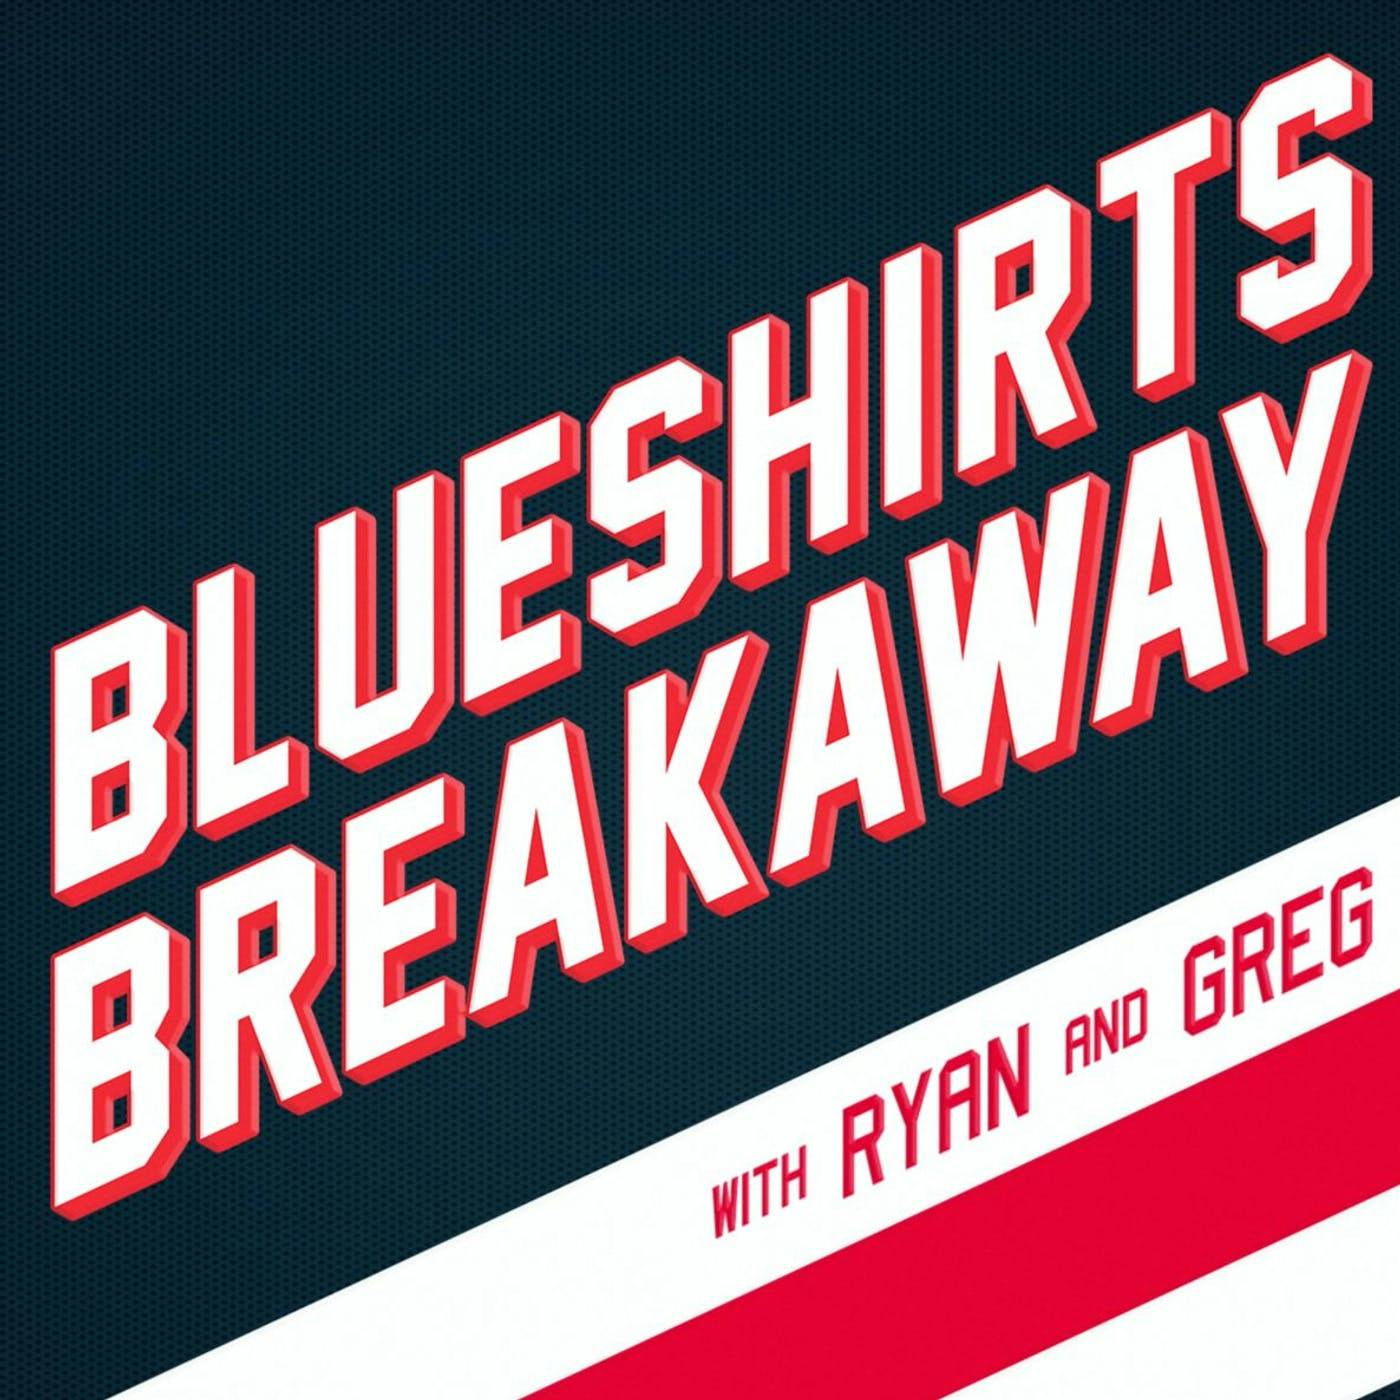 Blueshirts Breakaway EP 98 - The 2017 Season Preview